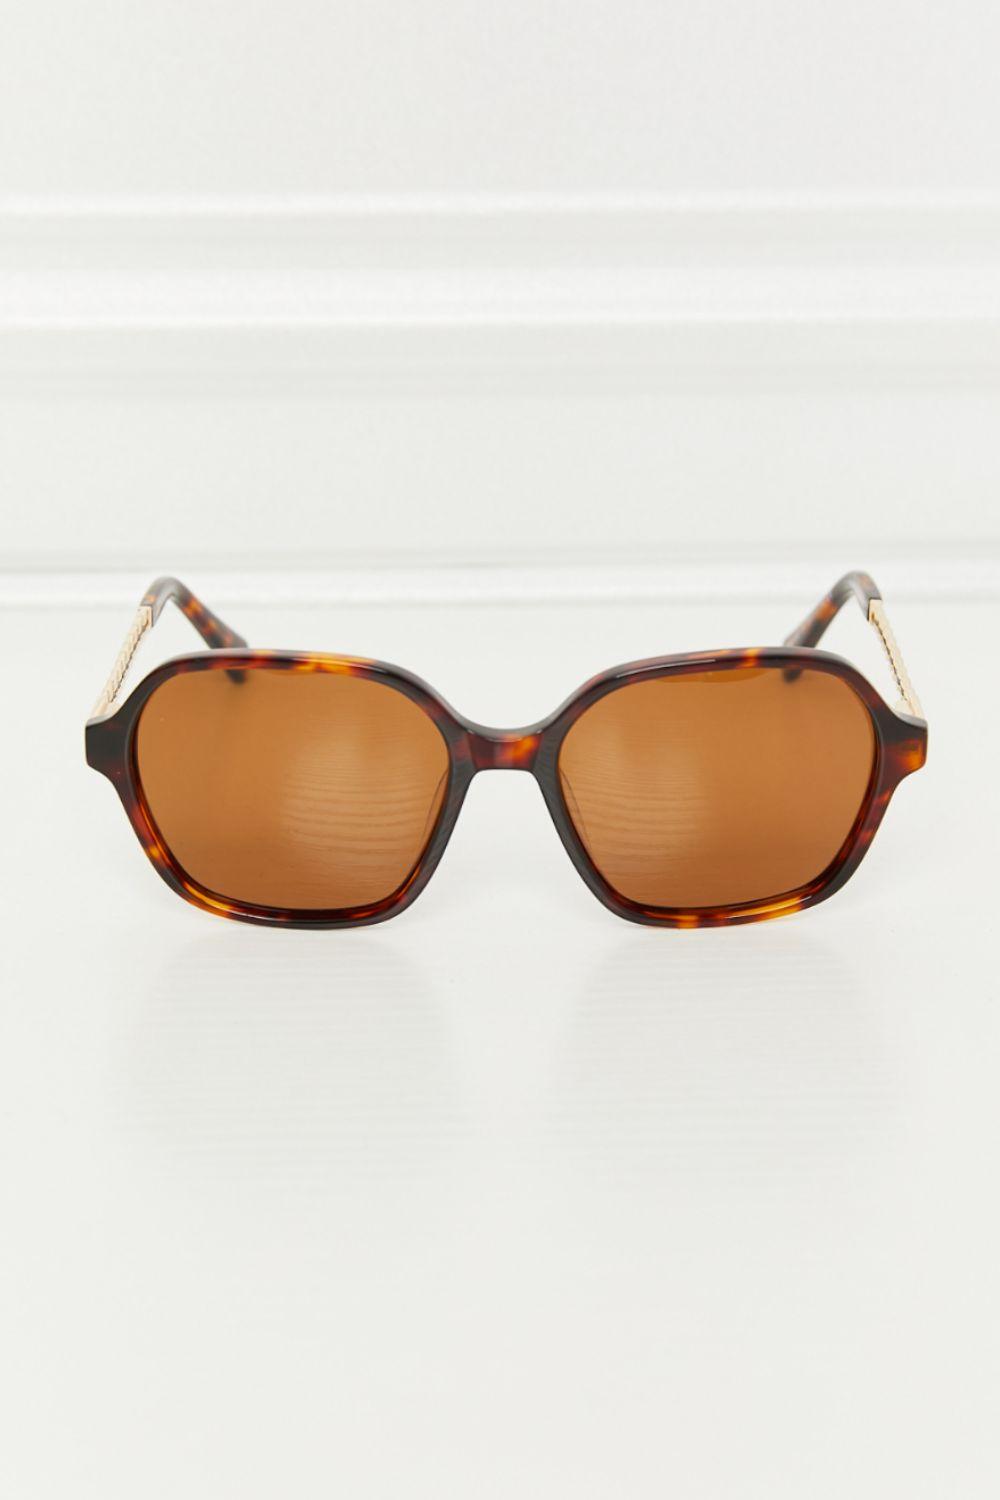 TAC Polarization Lens Full Rim Sunglasses - Olive Ave